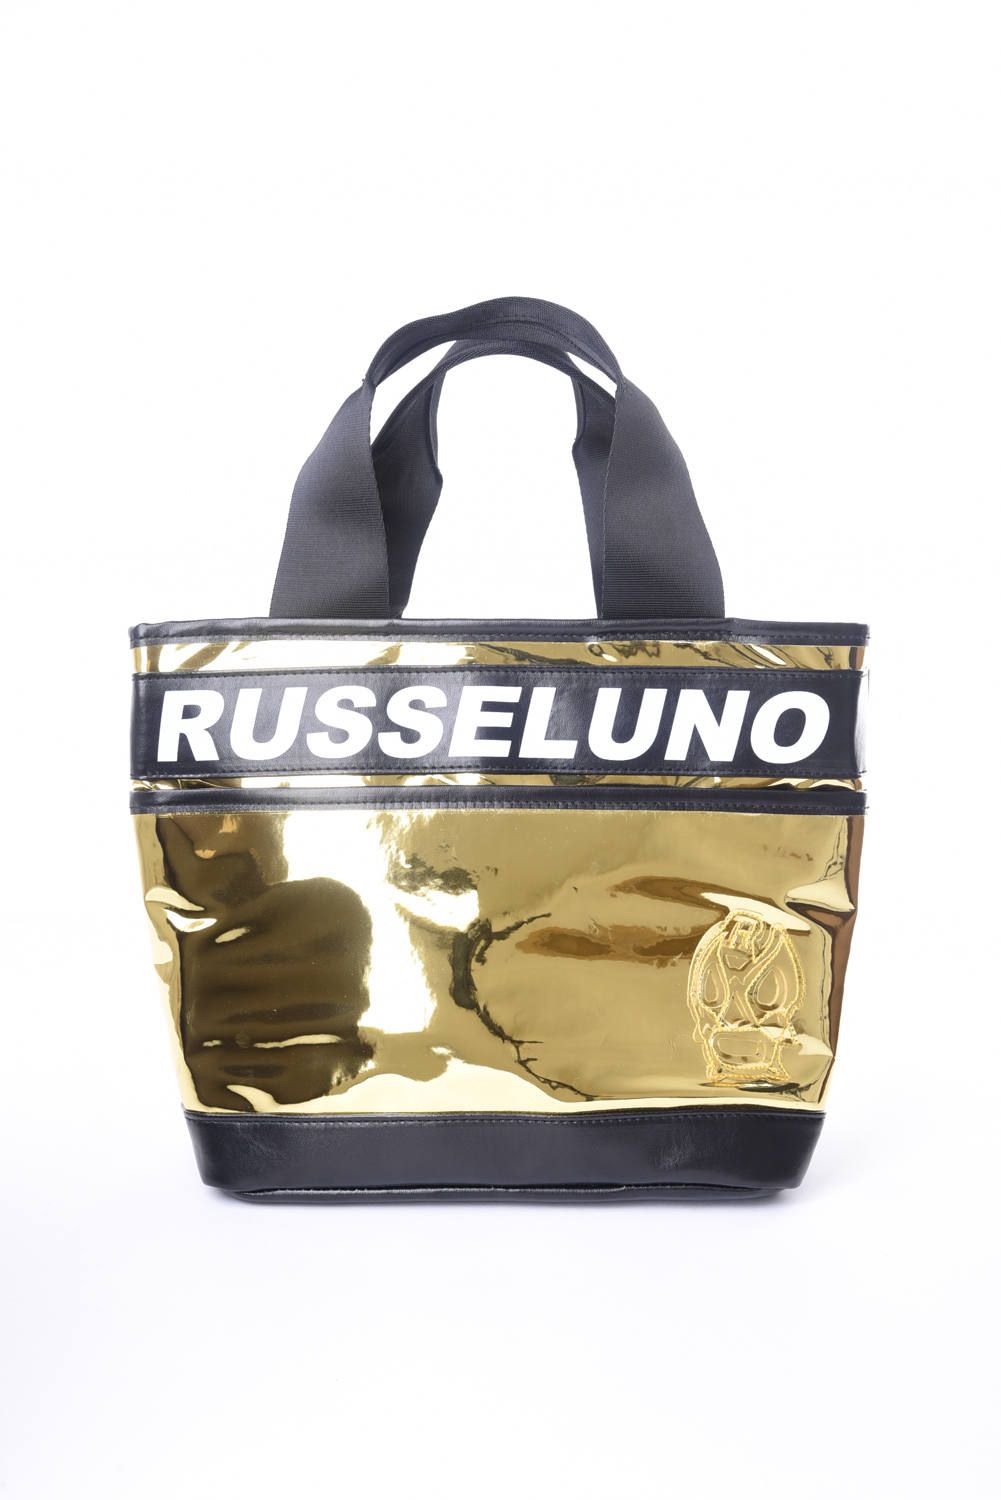 RUSSELUNO - SHINY CART BAG / 光沢 カートバッグ シルバー | GOSSIP GOLF